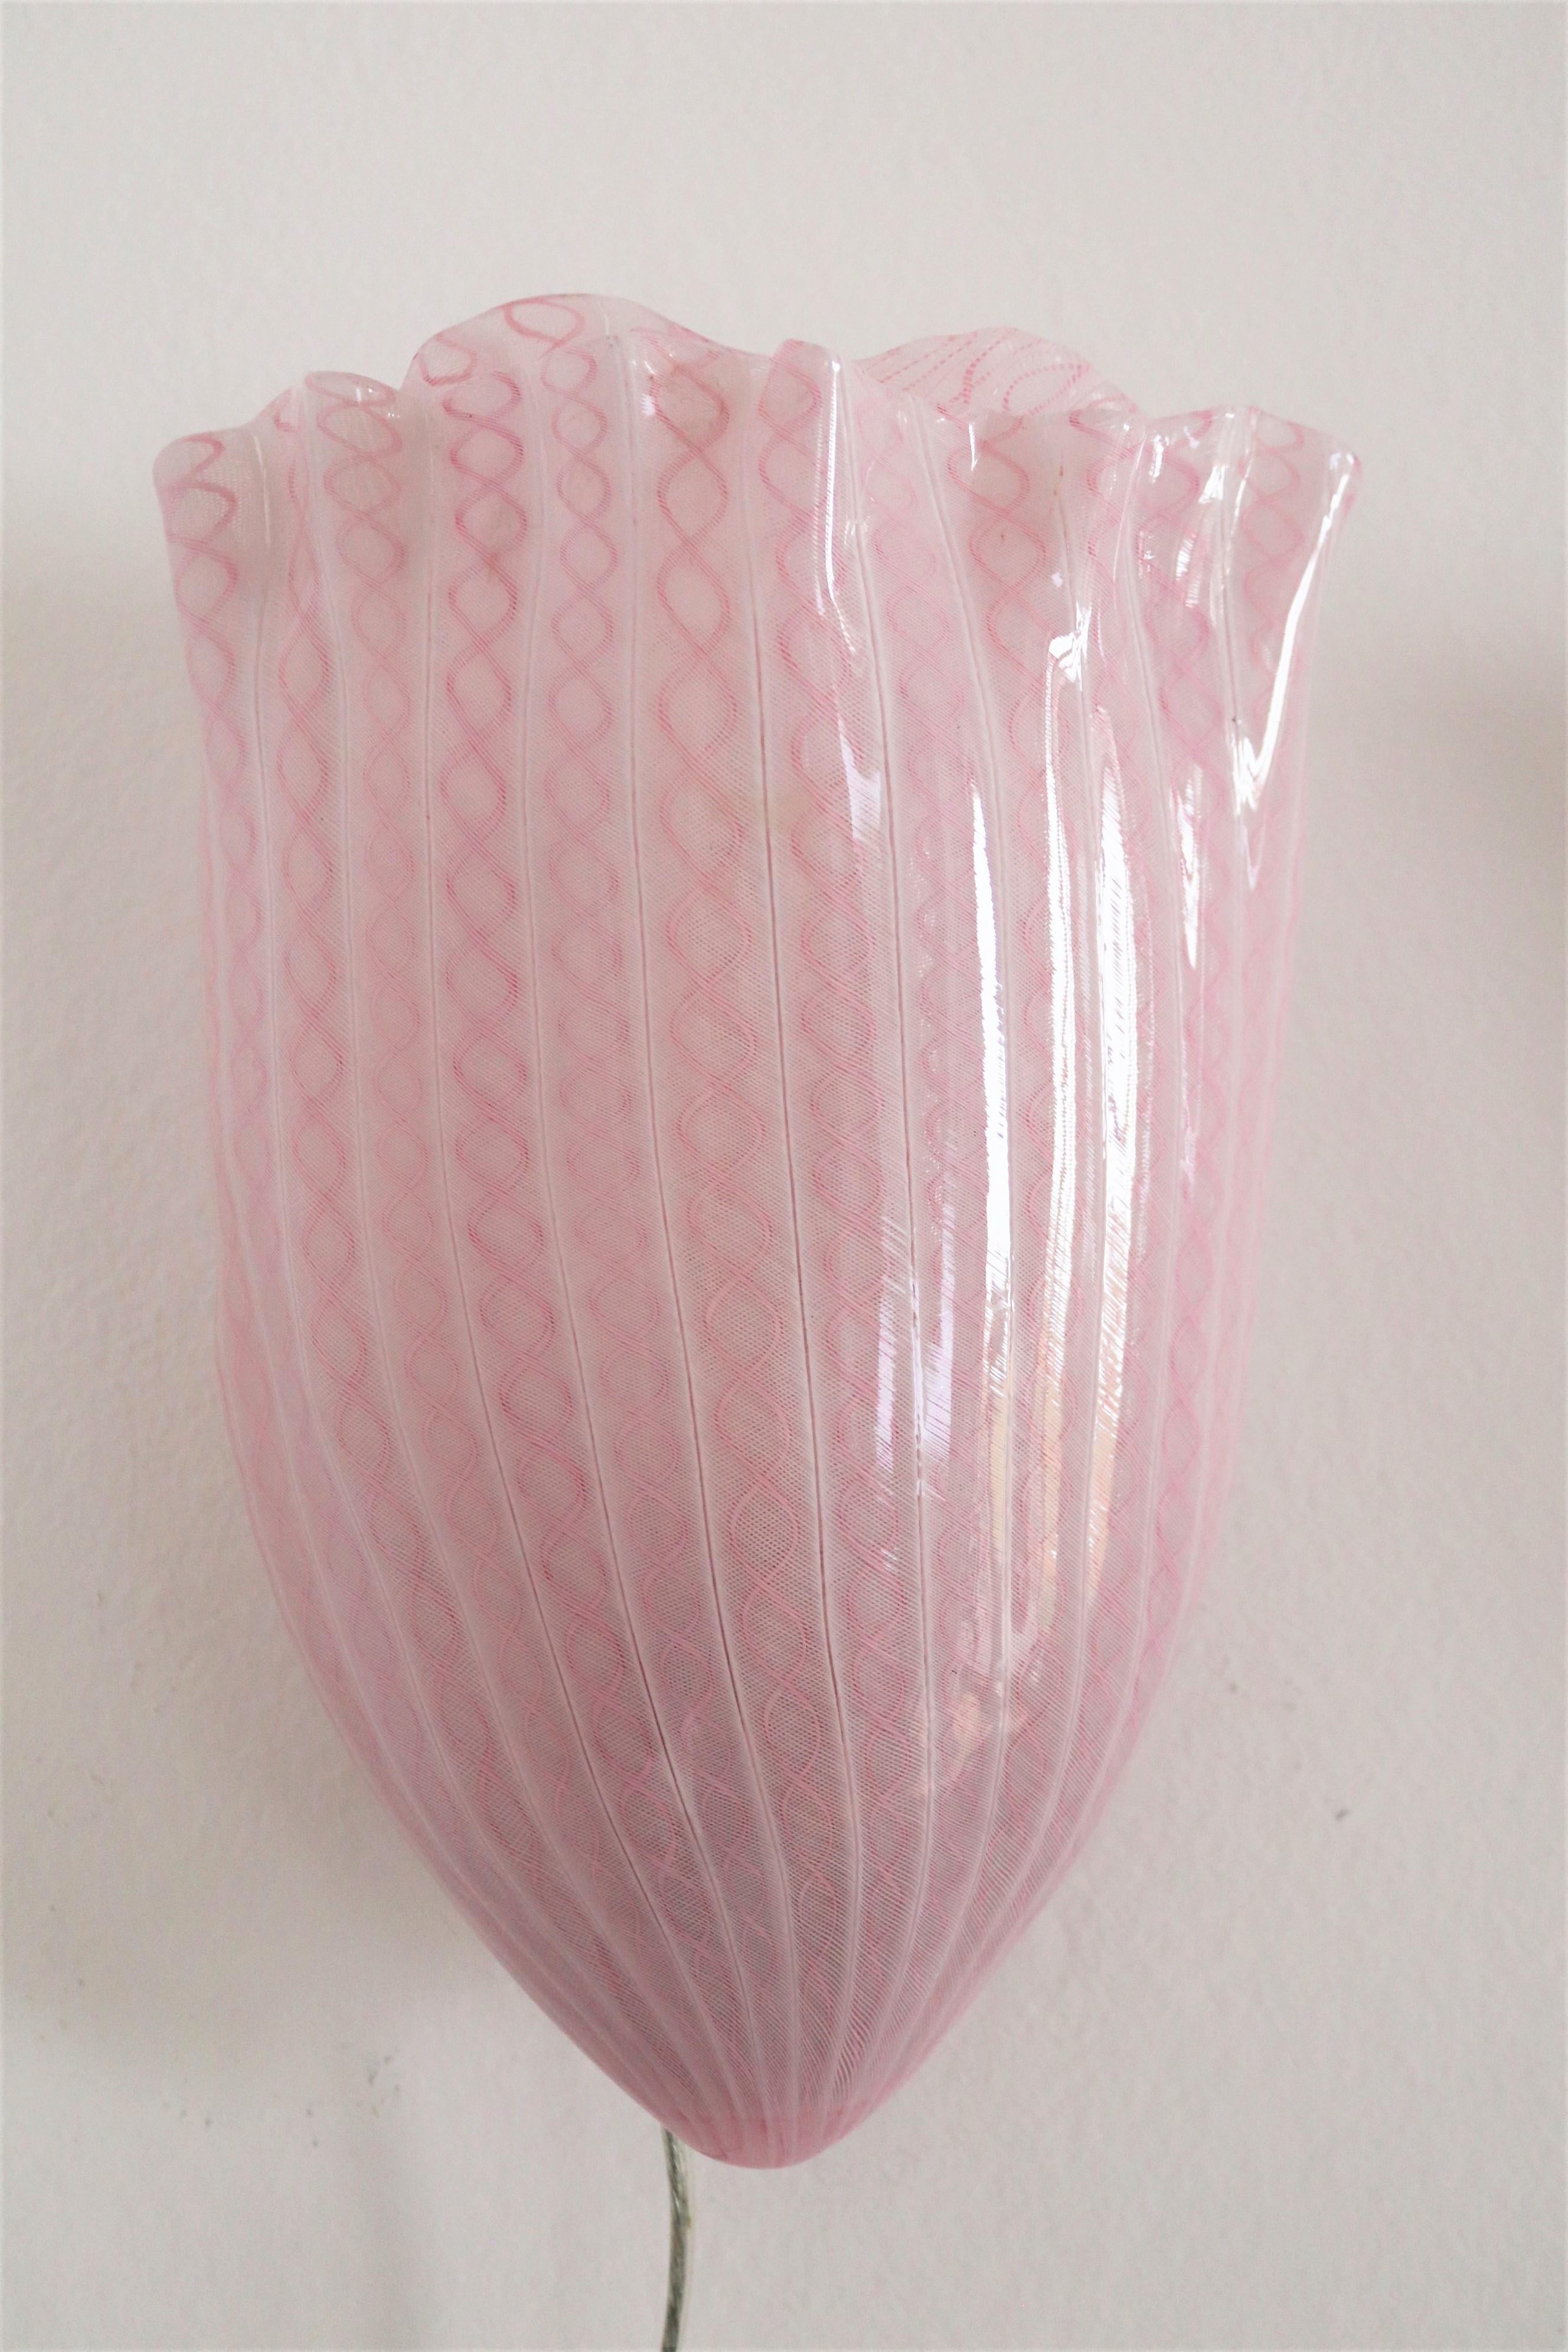 Mid-20th Century Fulvio Bianconi Venini Italian Midcentury Wall Sconces in Pink Murano Glass For Sale